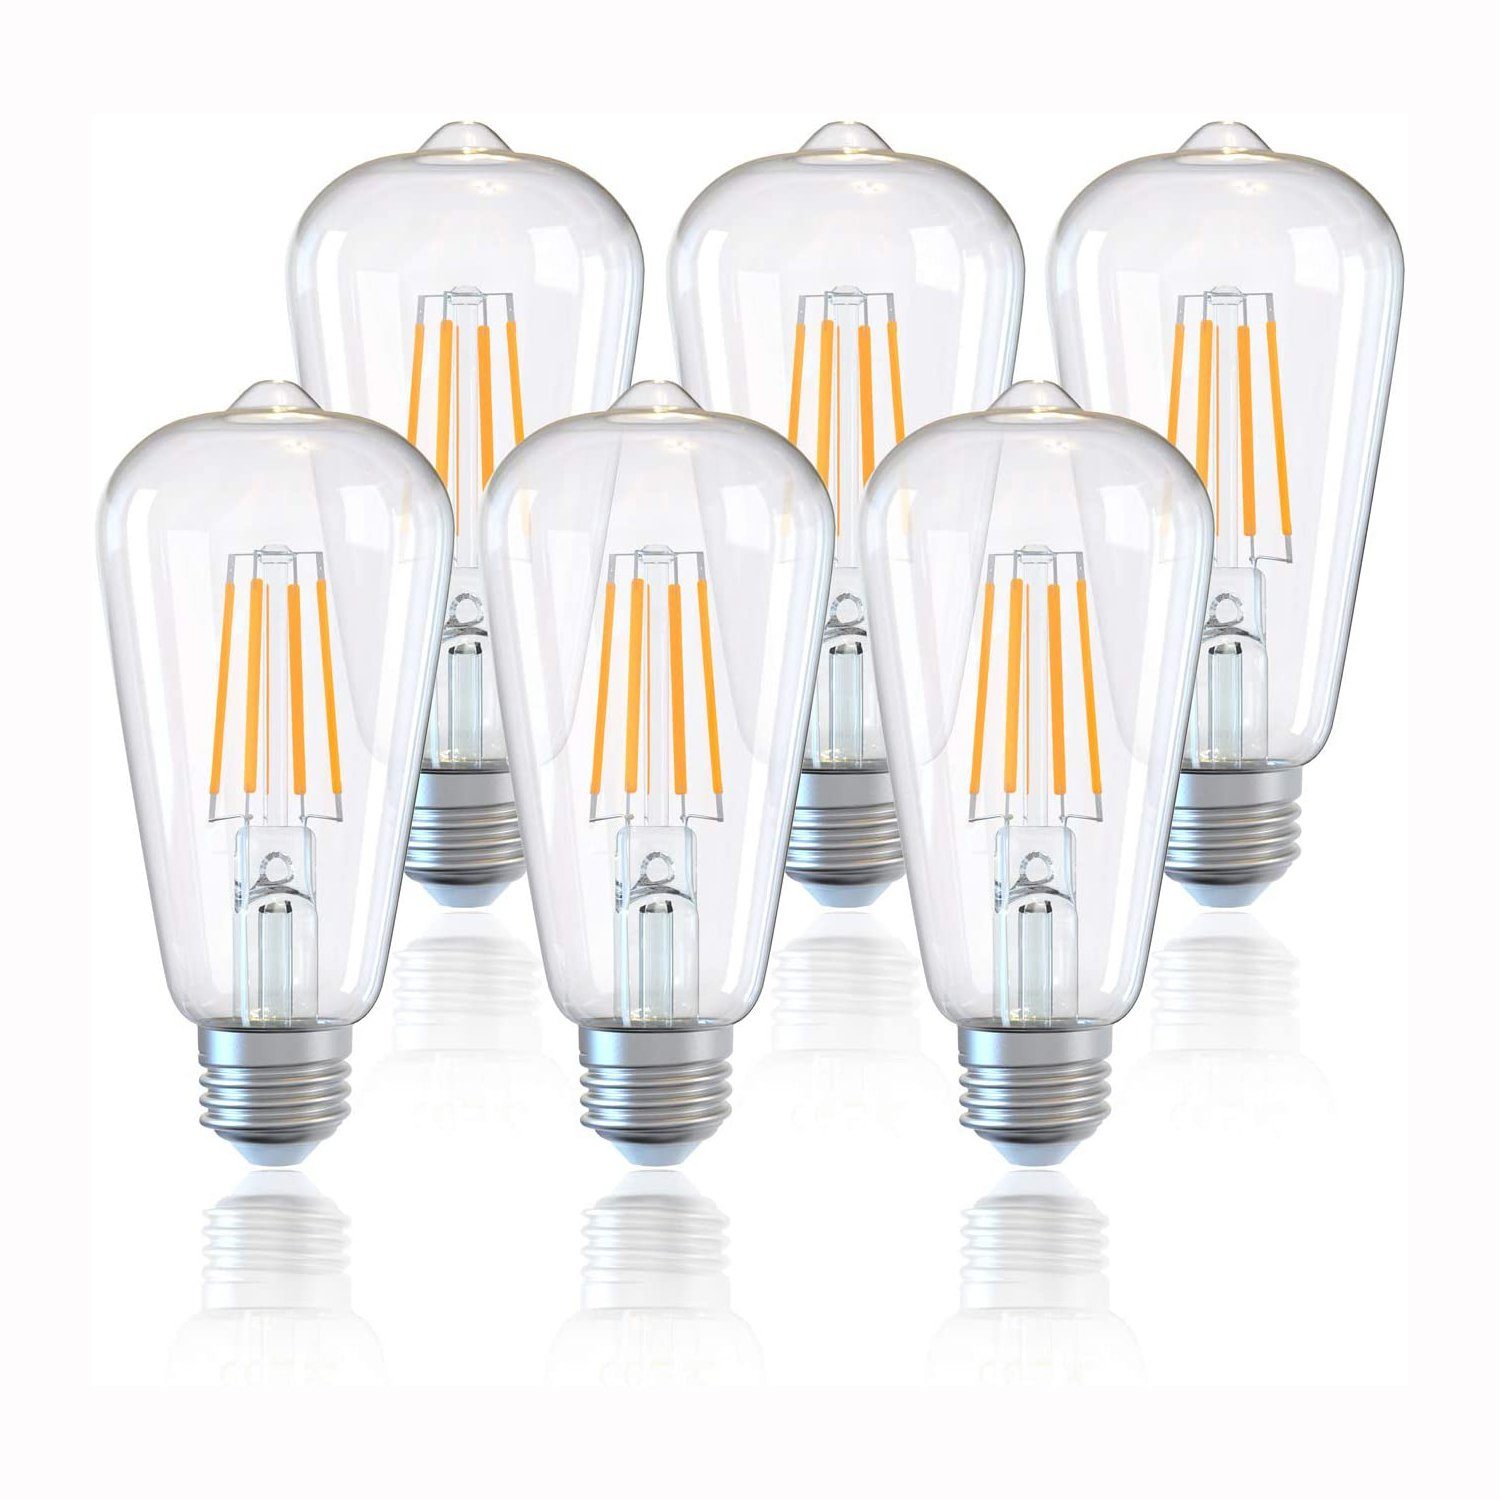 Leway LED Flutlichtstrahler »4W E27 Retro ST64 Edison Glühbirne LED,470Lm  Warmweiß 2500K LED Birne,Ersetzt 40W,360°Abstrahlwinkel Energiesparlampe,Vintage  Beleuchtung,6er-Pack«